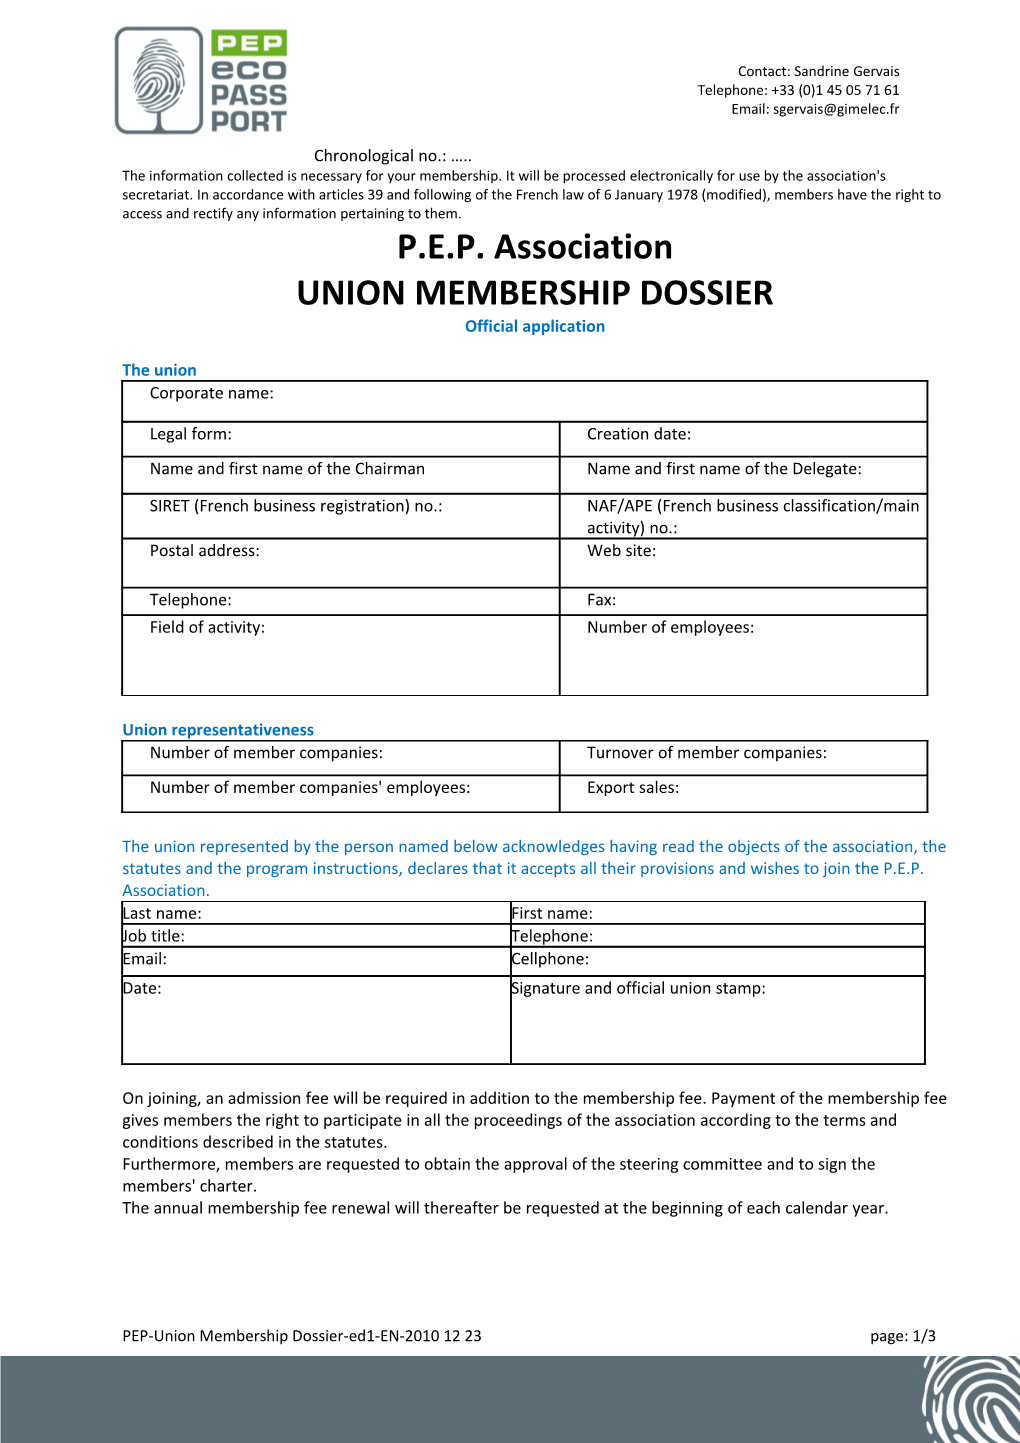 Union Membership Dossier